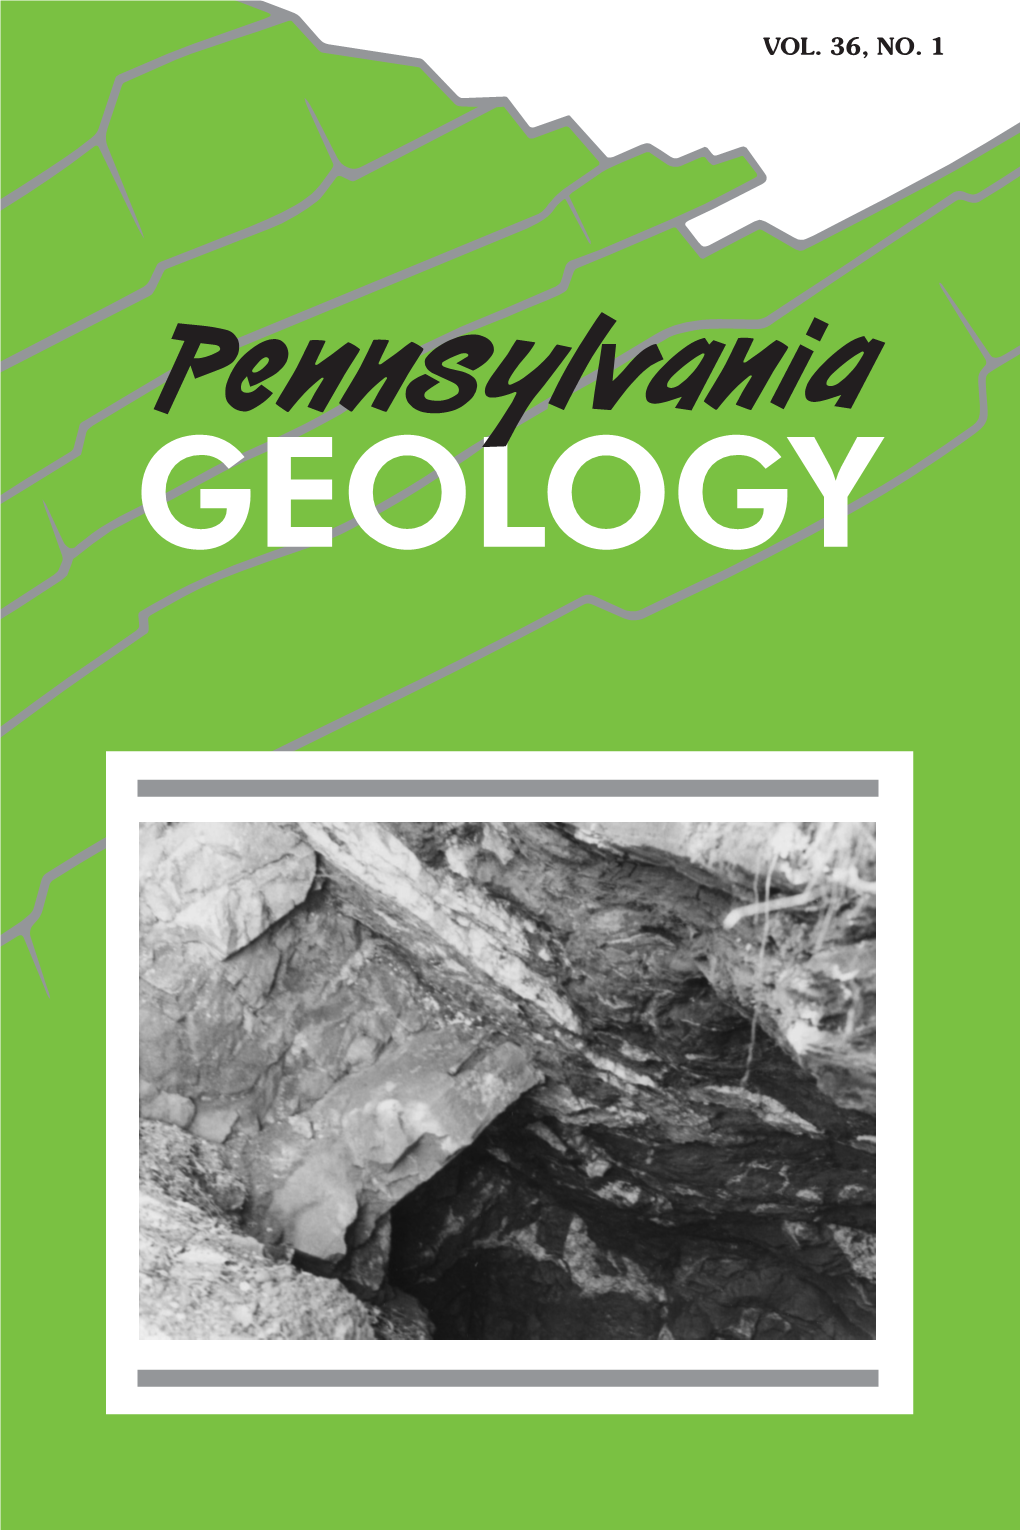 Pennsylvania Geology, V. 36, No. 1